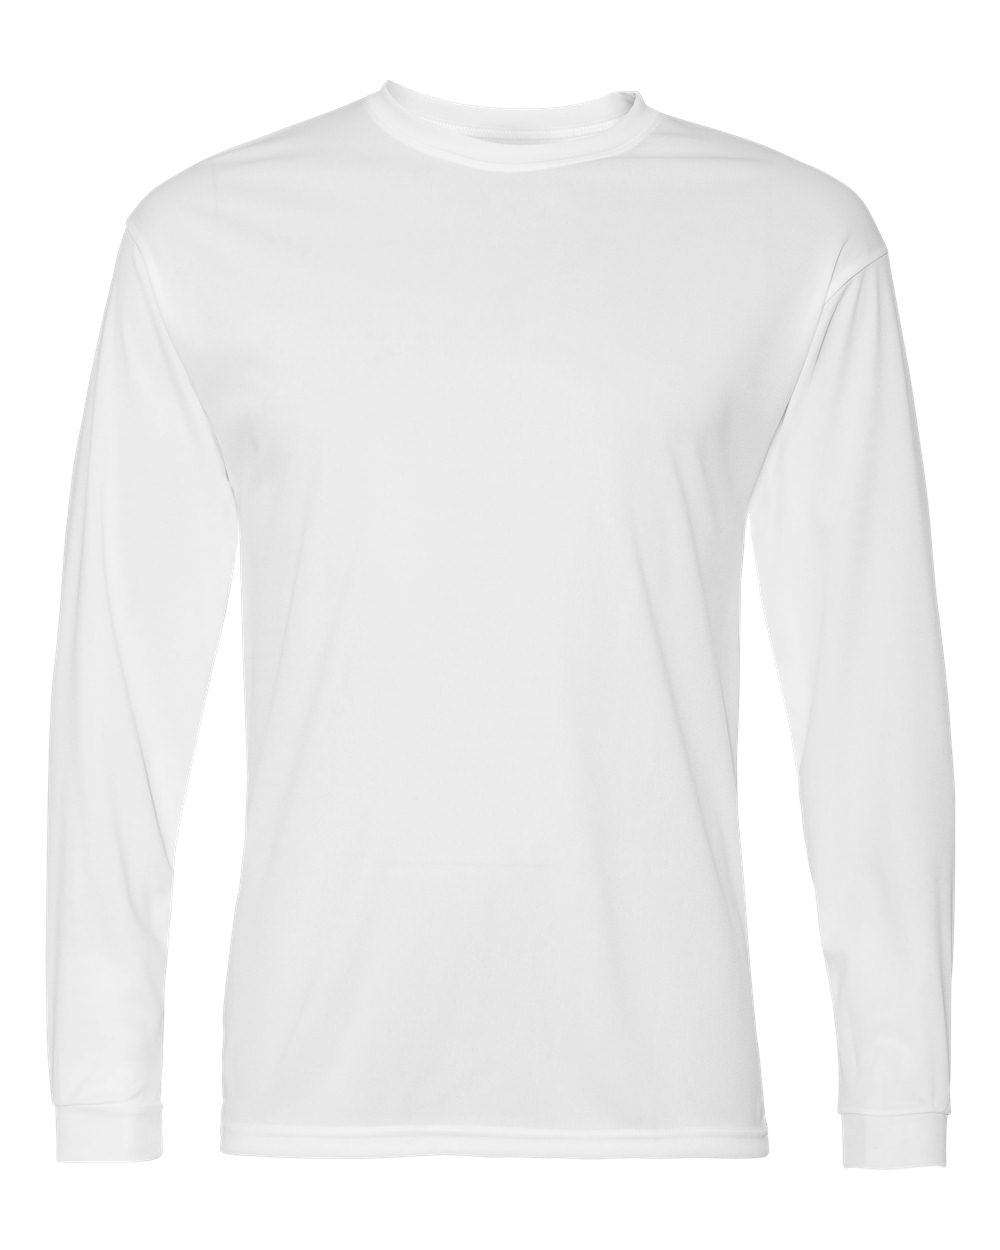 C2 Sport 5104 - Long Sleeve Performance T-Shirt